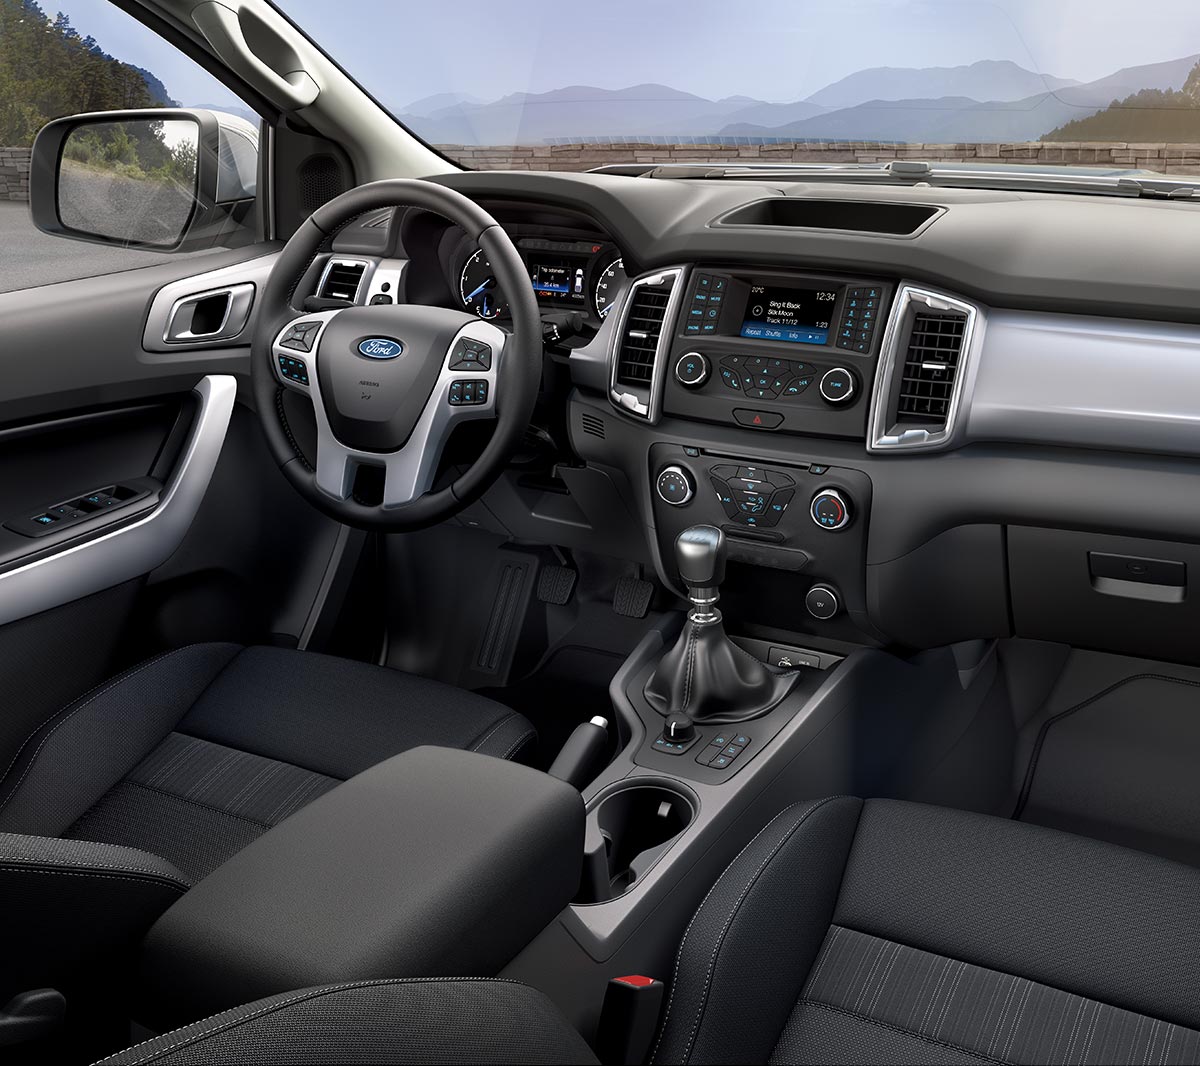 Ford Ranger XLT interior cabin view